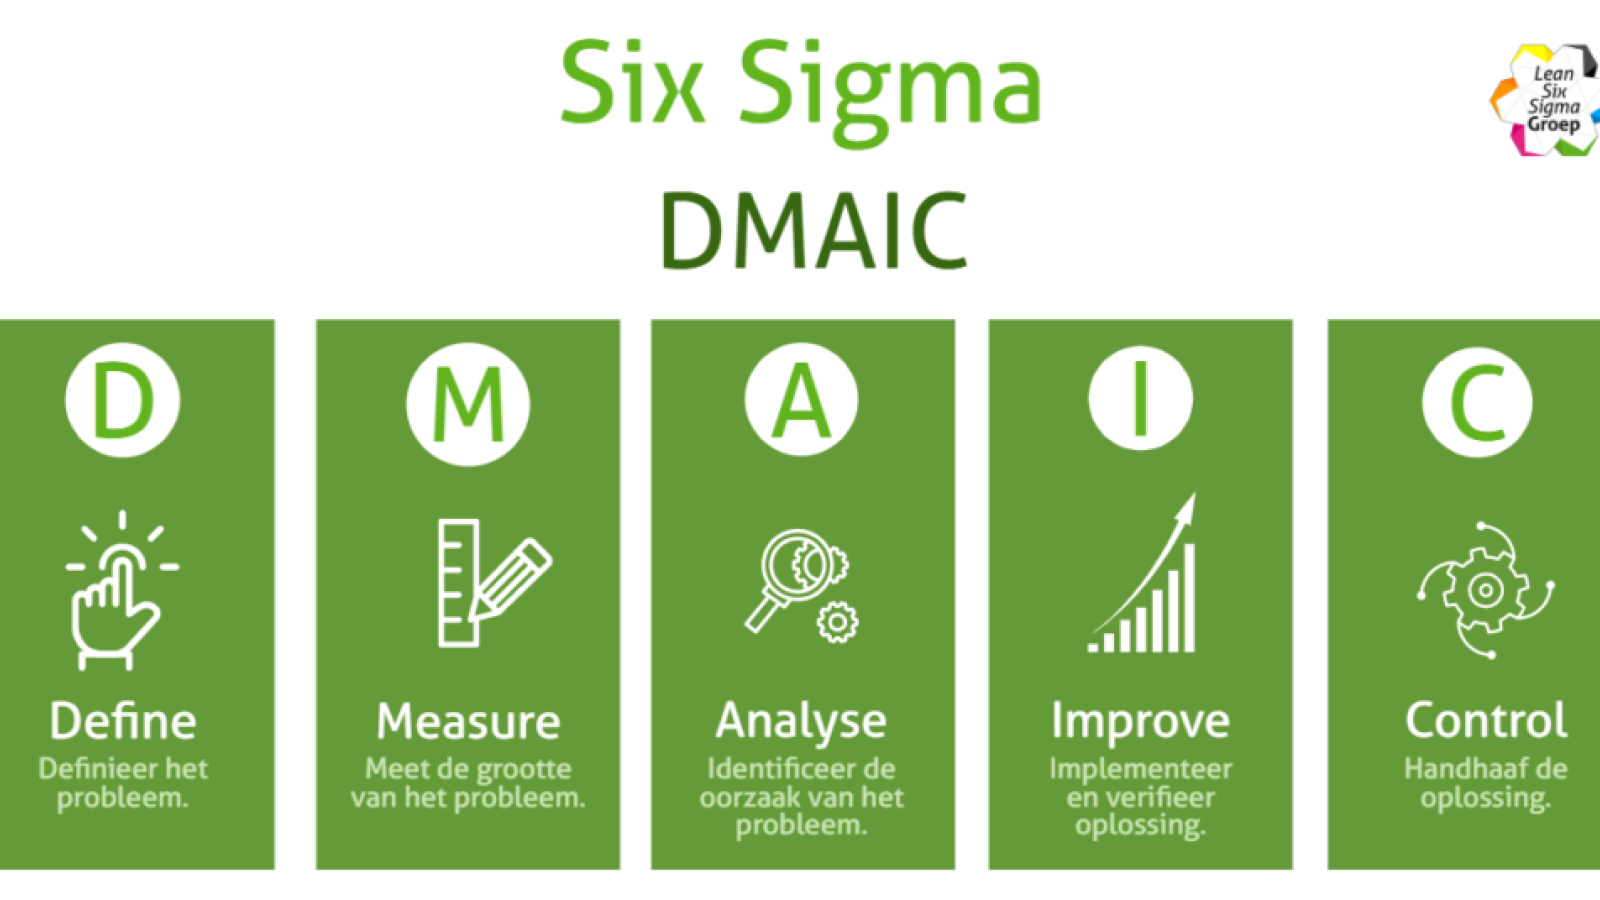 DMAIC 6 Sigma. Методология DMAIC. Цикл DMAIC. Методология Lean Six Sigma. Improved control